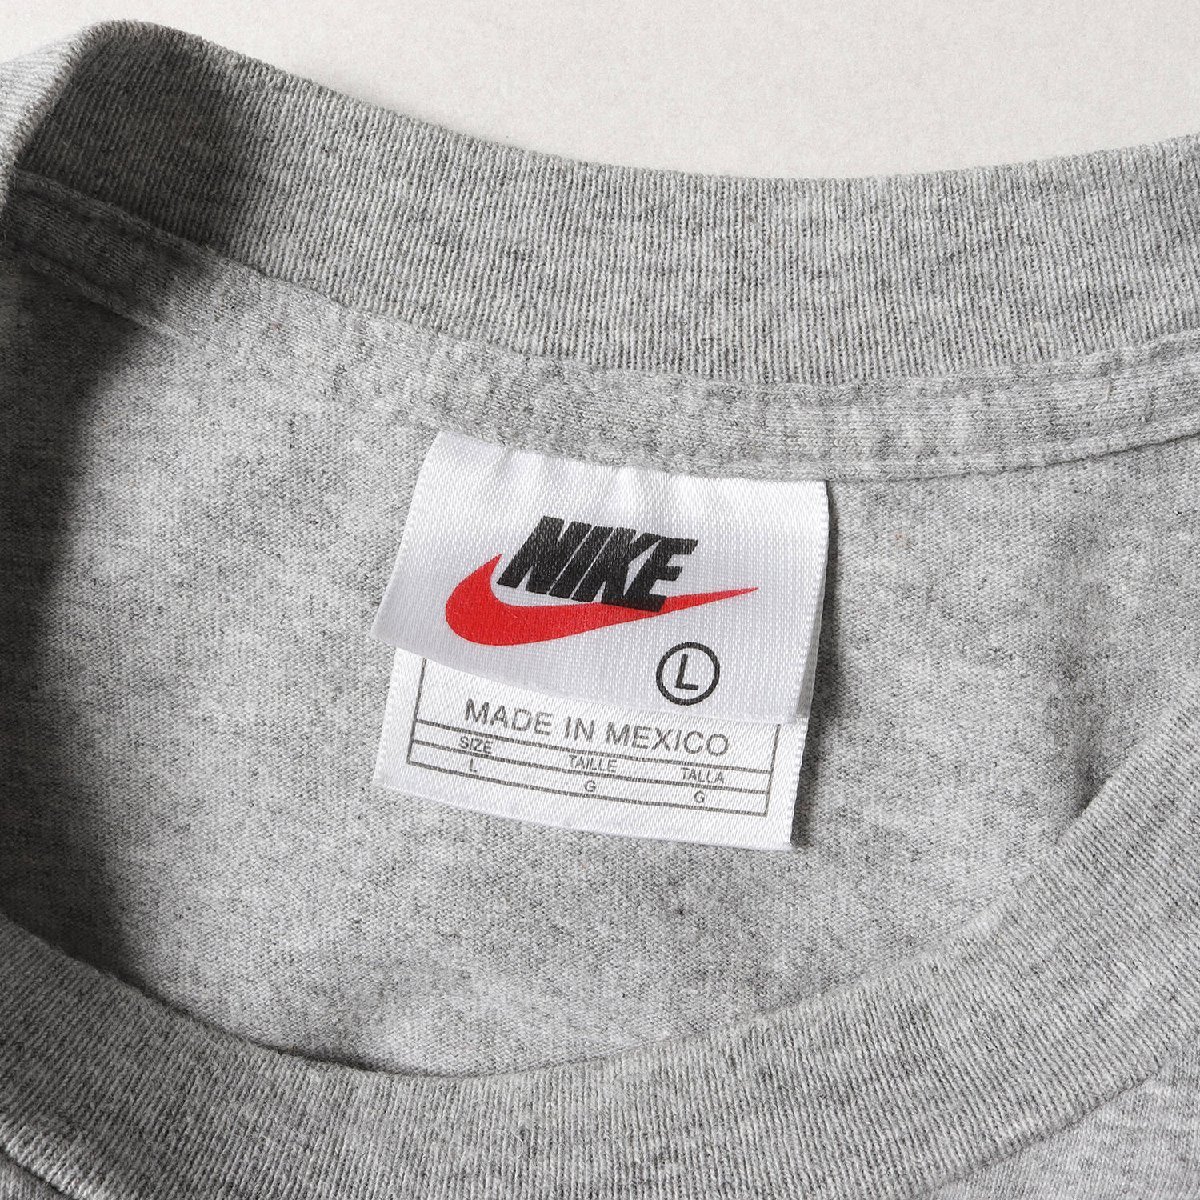 NIKE  Nike   футболка   размер  :L 90s AIR JORDAN 14 ... гриф   футболка с коротким руковом  1998 год  модель   ...  серый  90  год выпуска   винтажный    бу одежда 